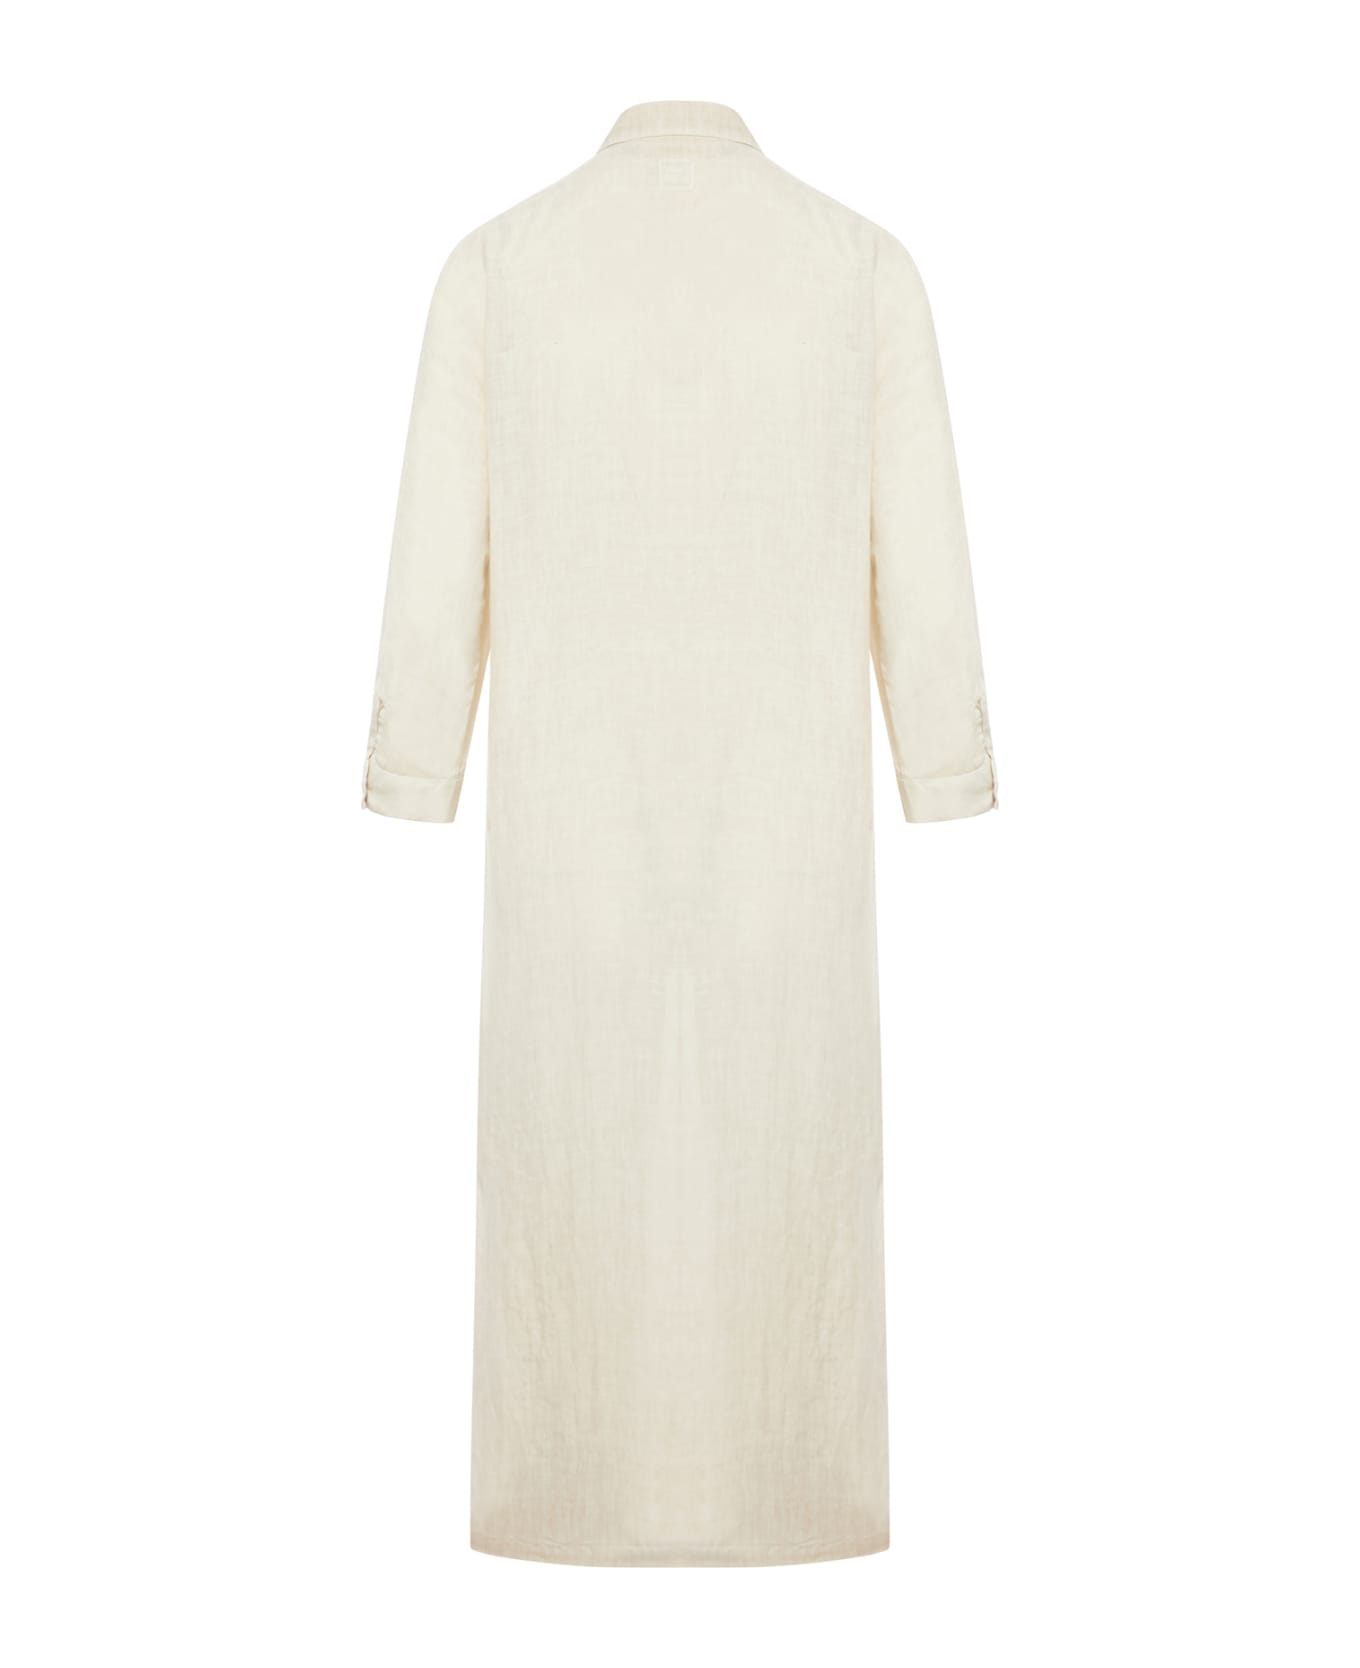 120% Lino Woman Dress - Safari Soft